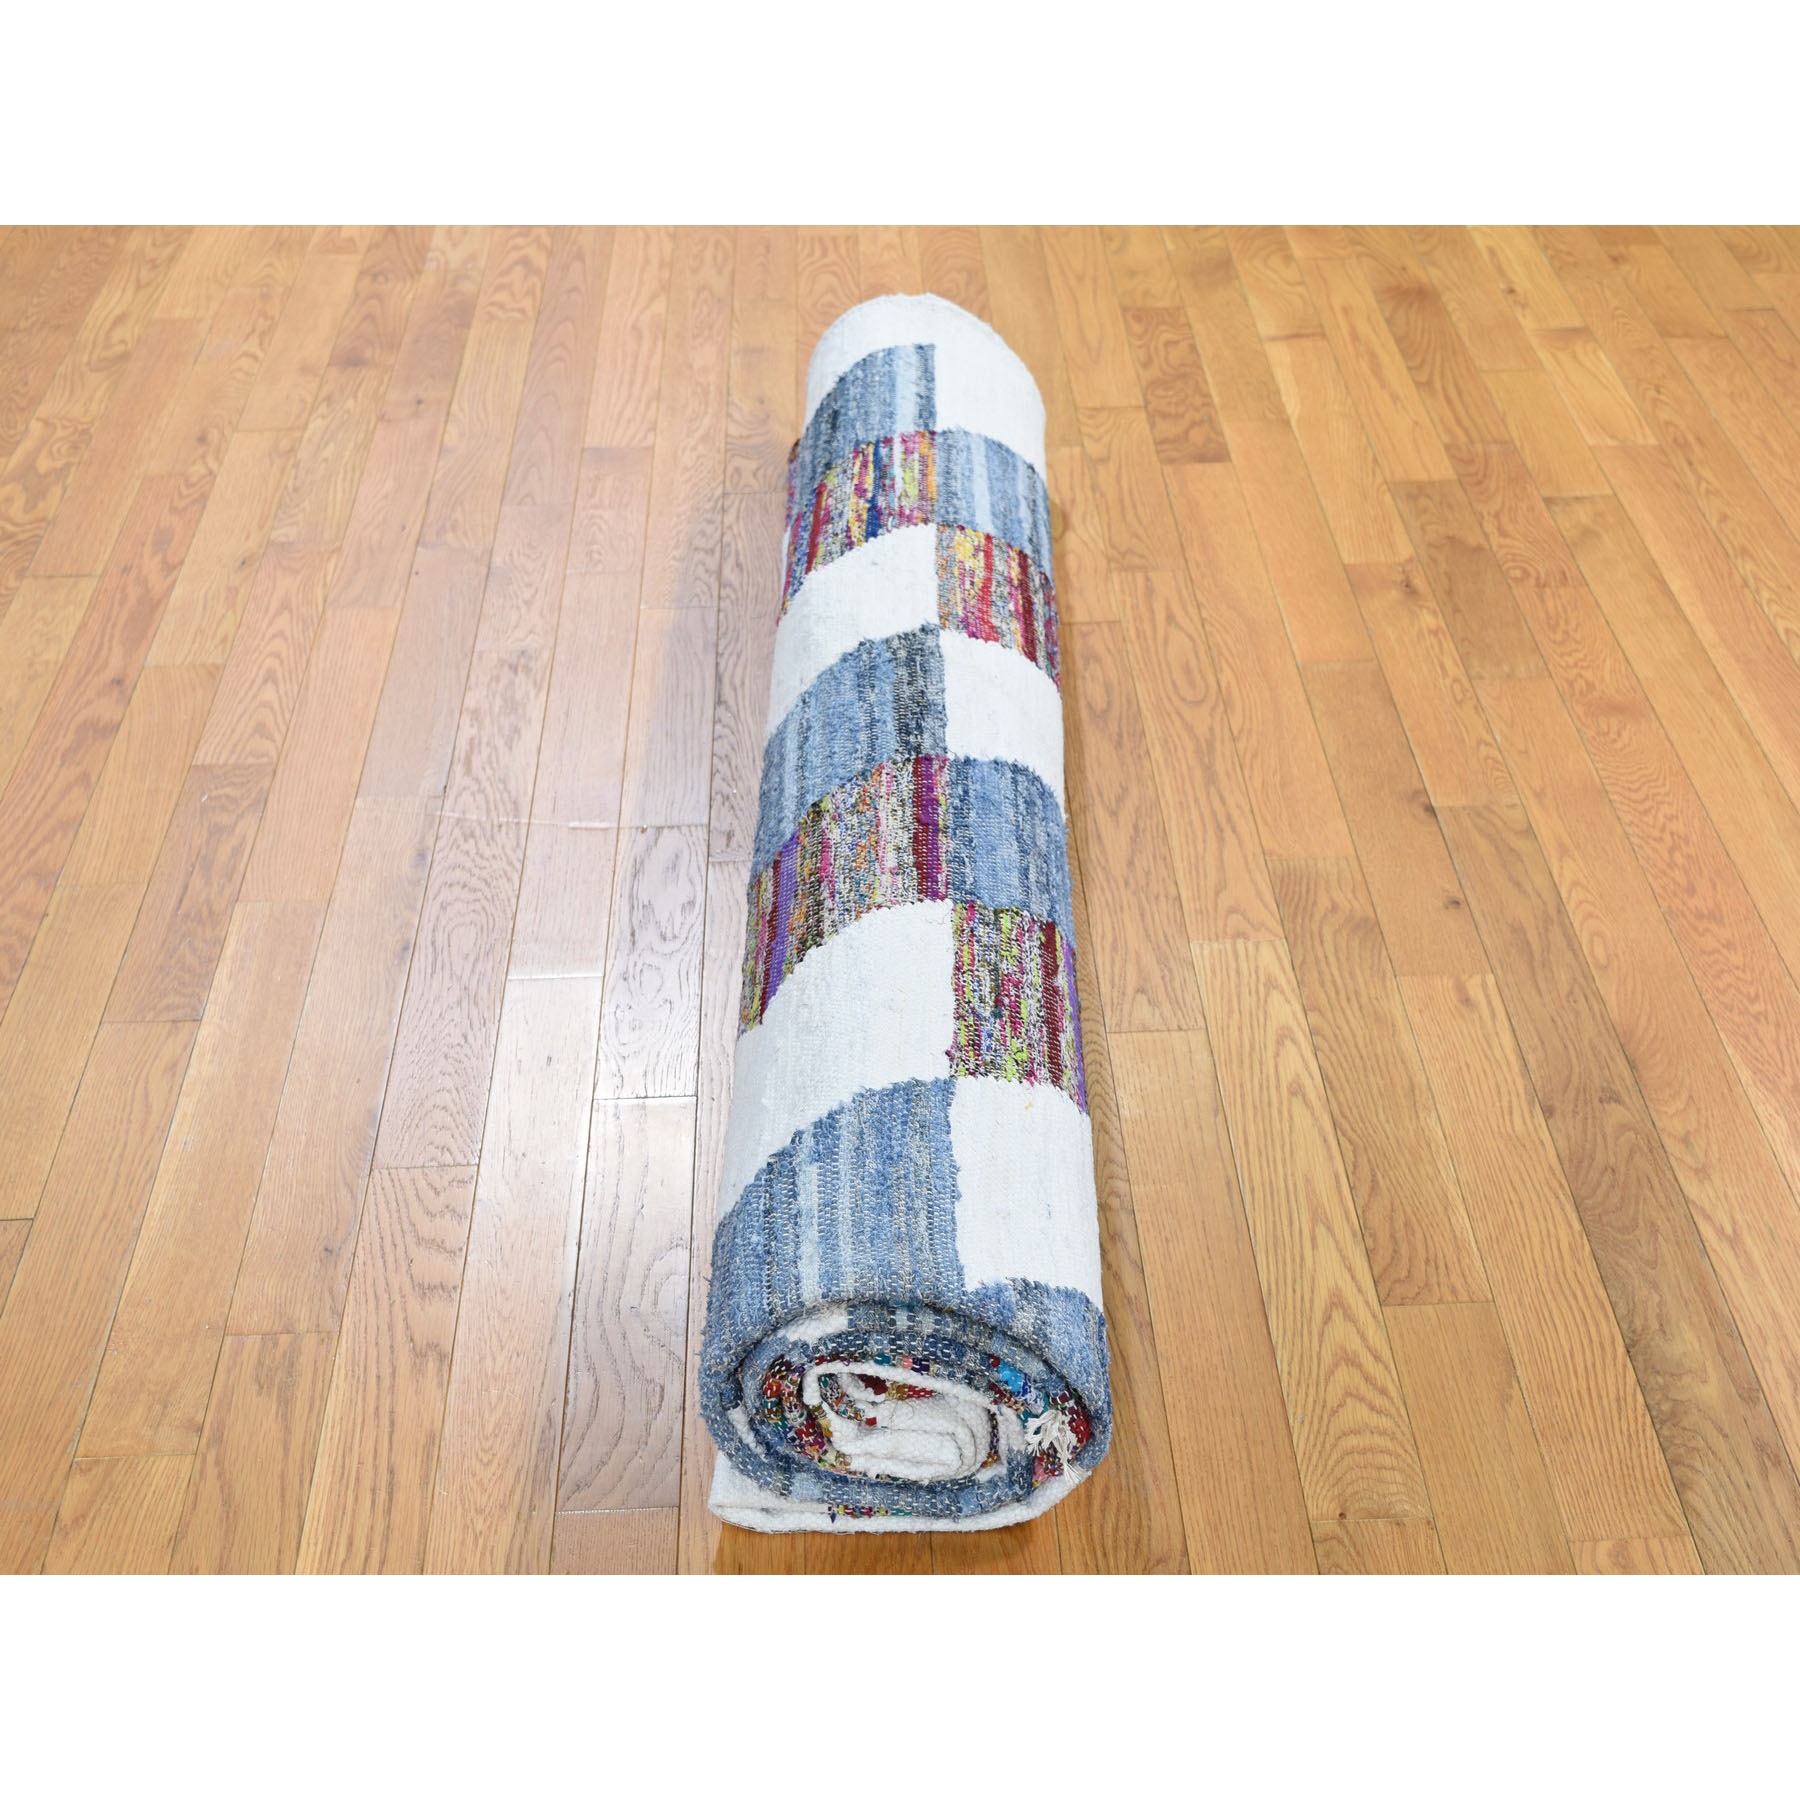 9-8 x14- Hand-Woven Geometric Cotton And Sari Silk Durie Kilim Oriental Rug 